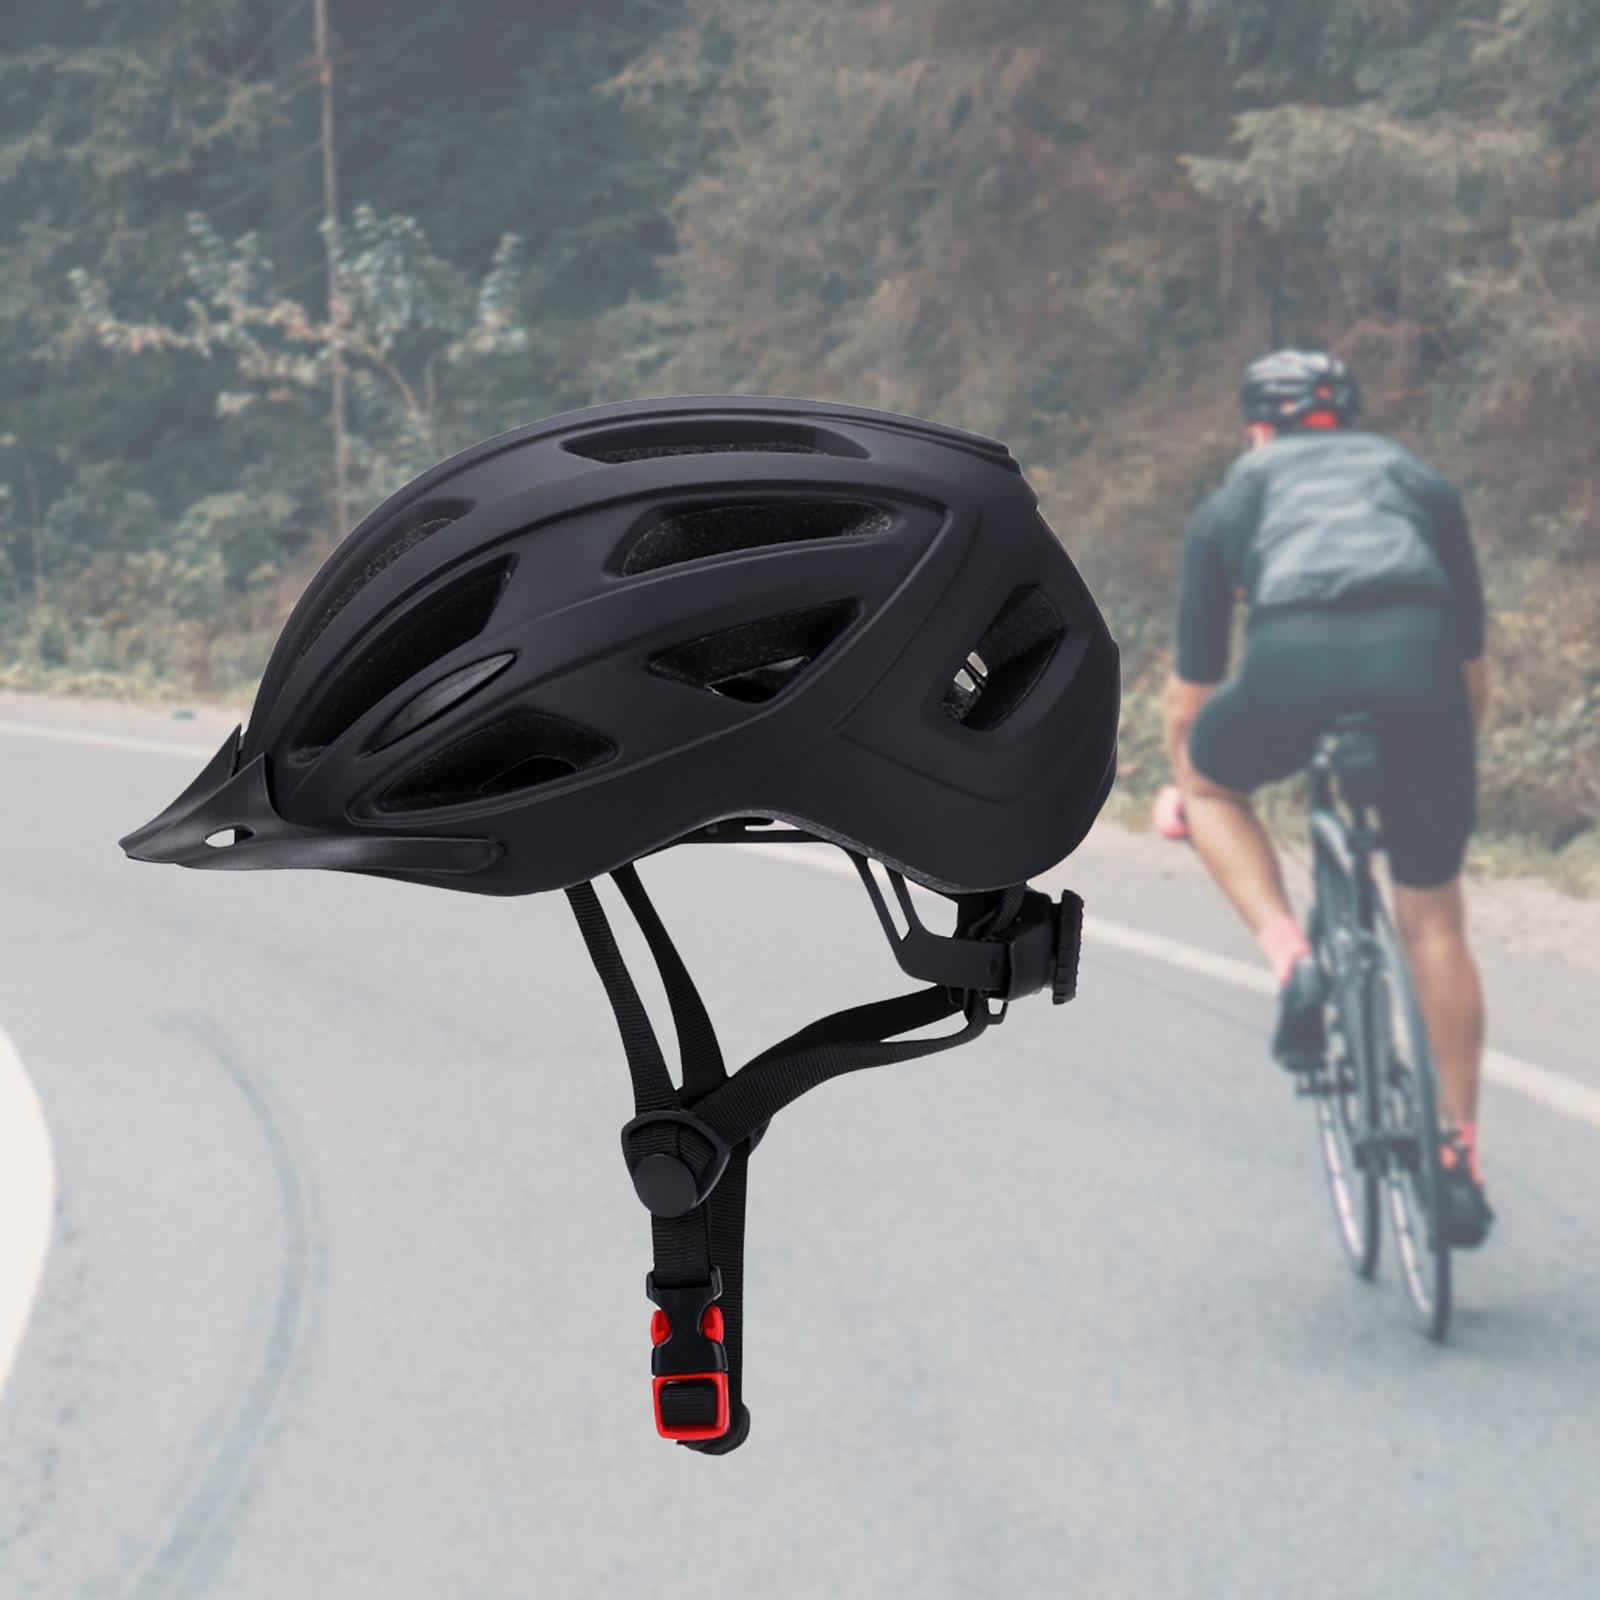 Bicycle Helmet Head Protective Lightweight with LED Safety Light Bike Helmet Black